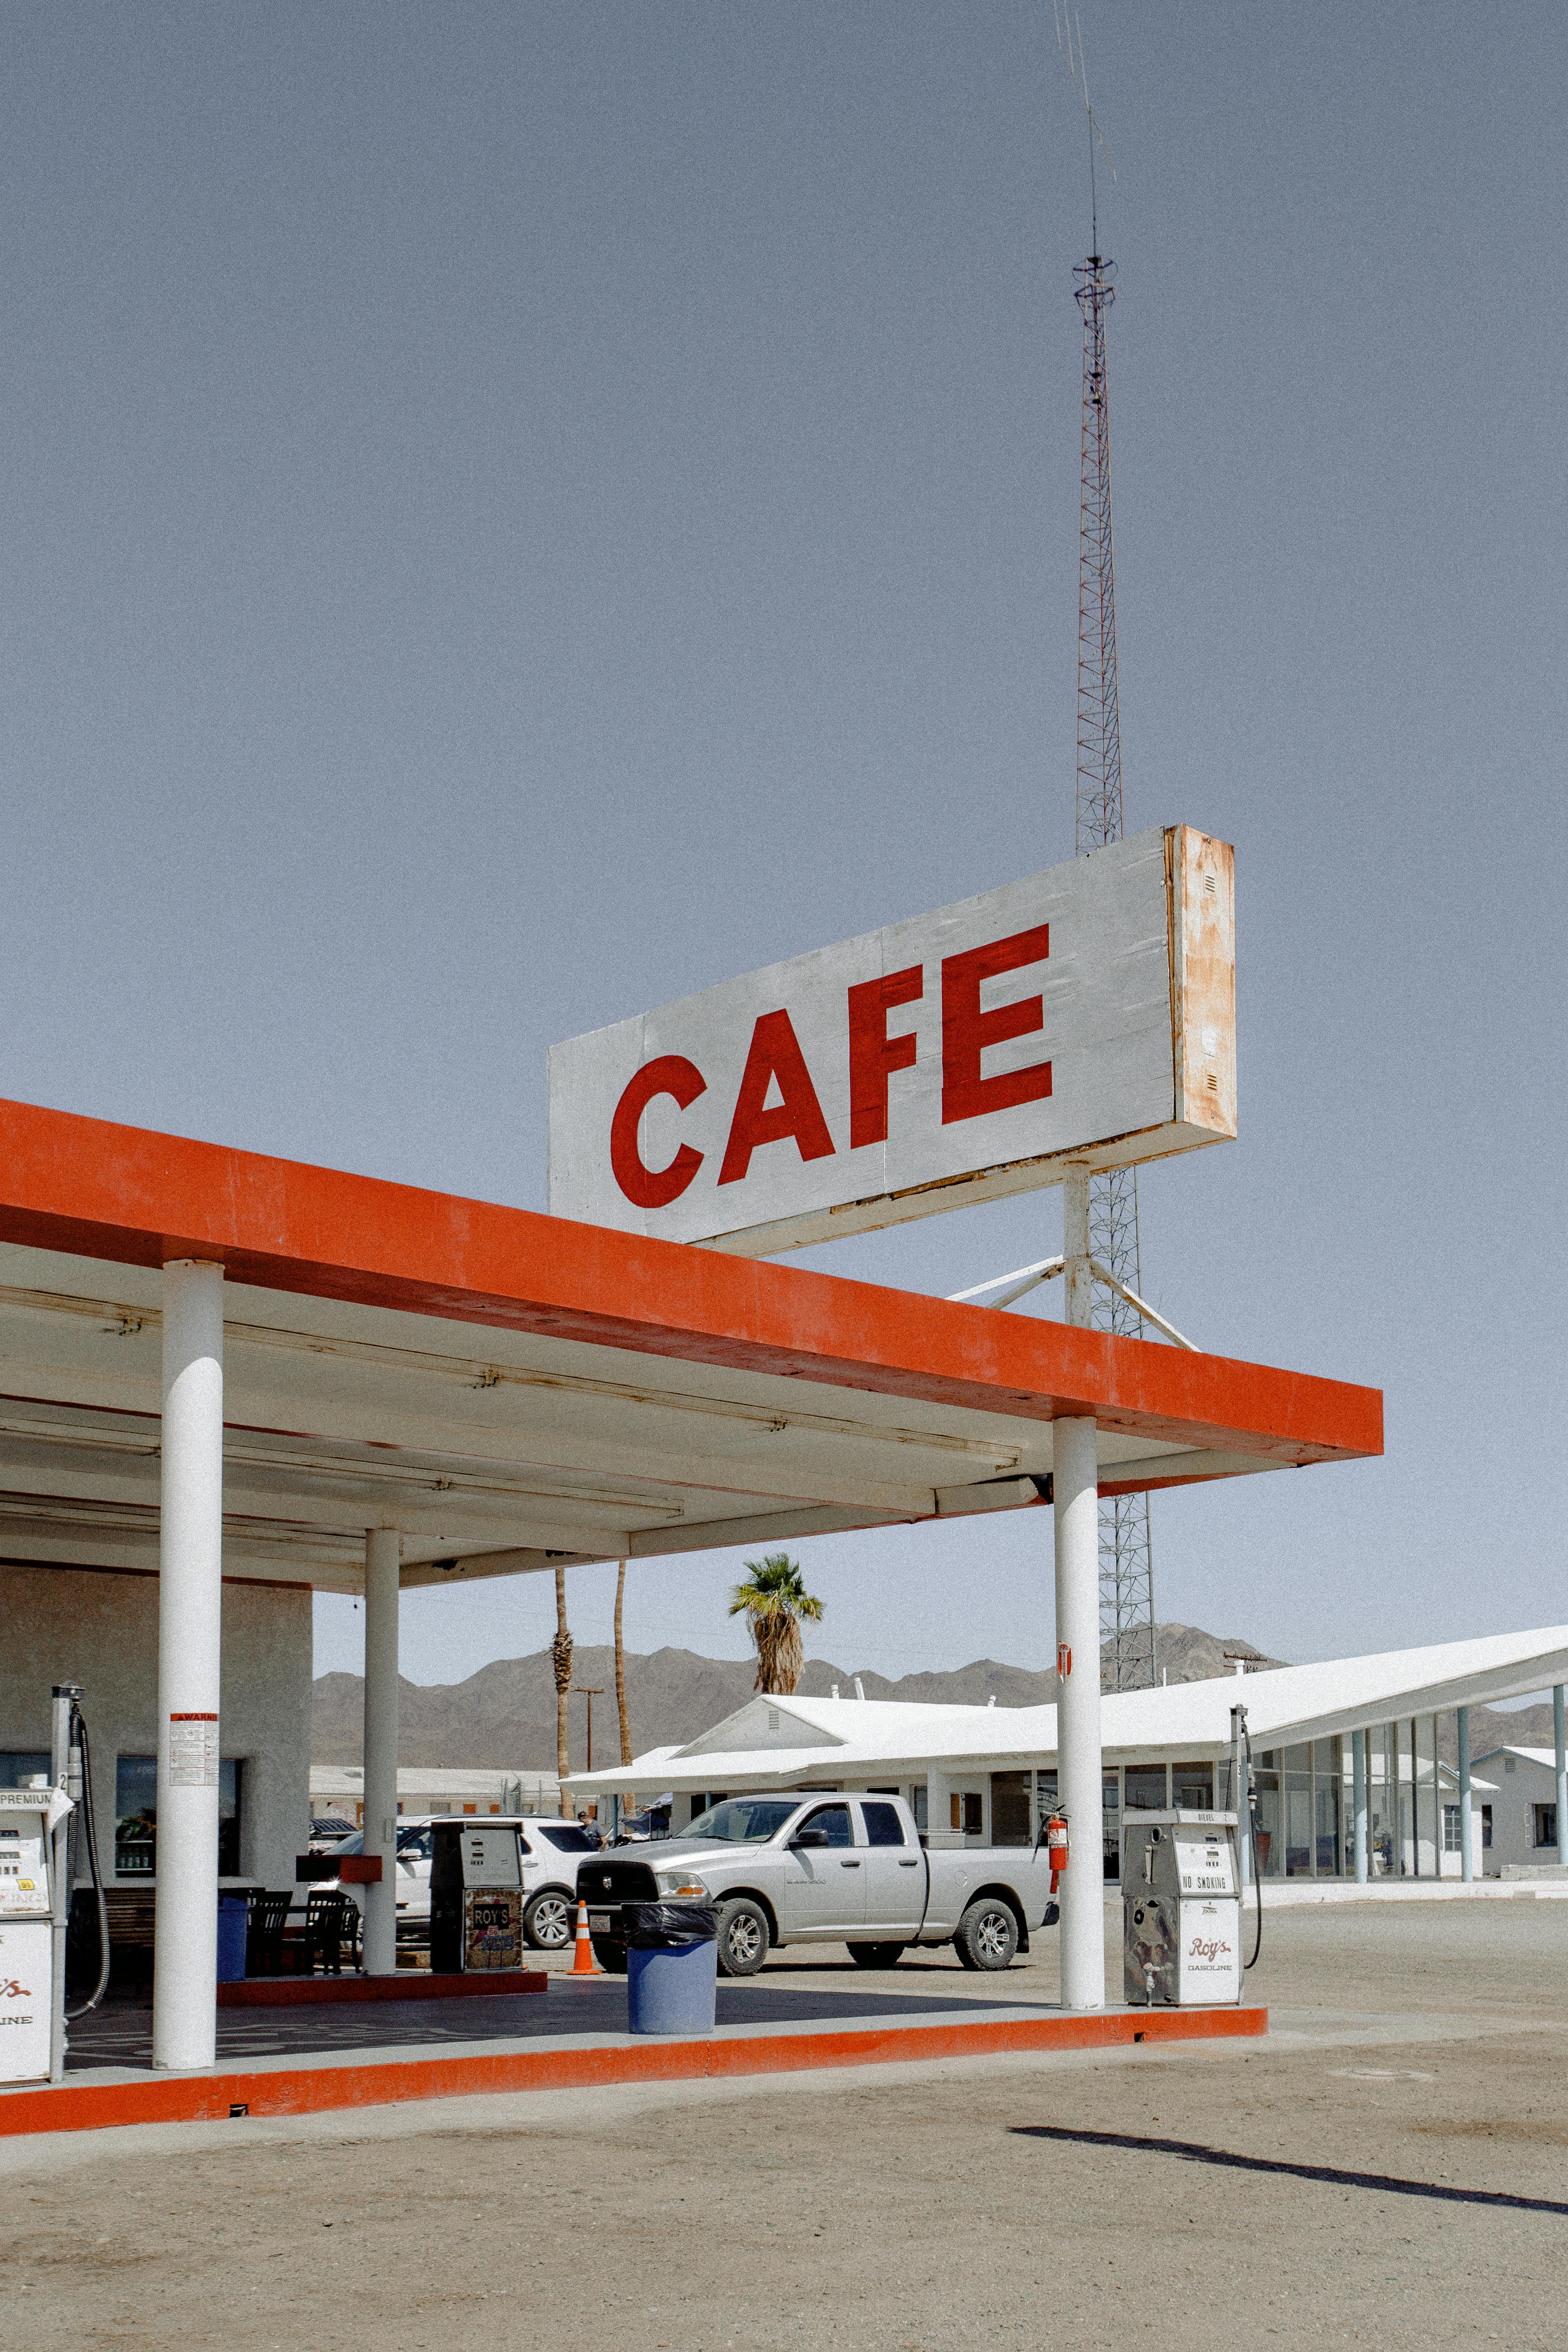 cafe at the gasoline station